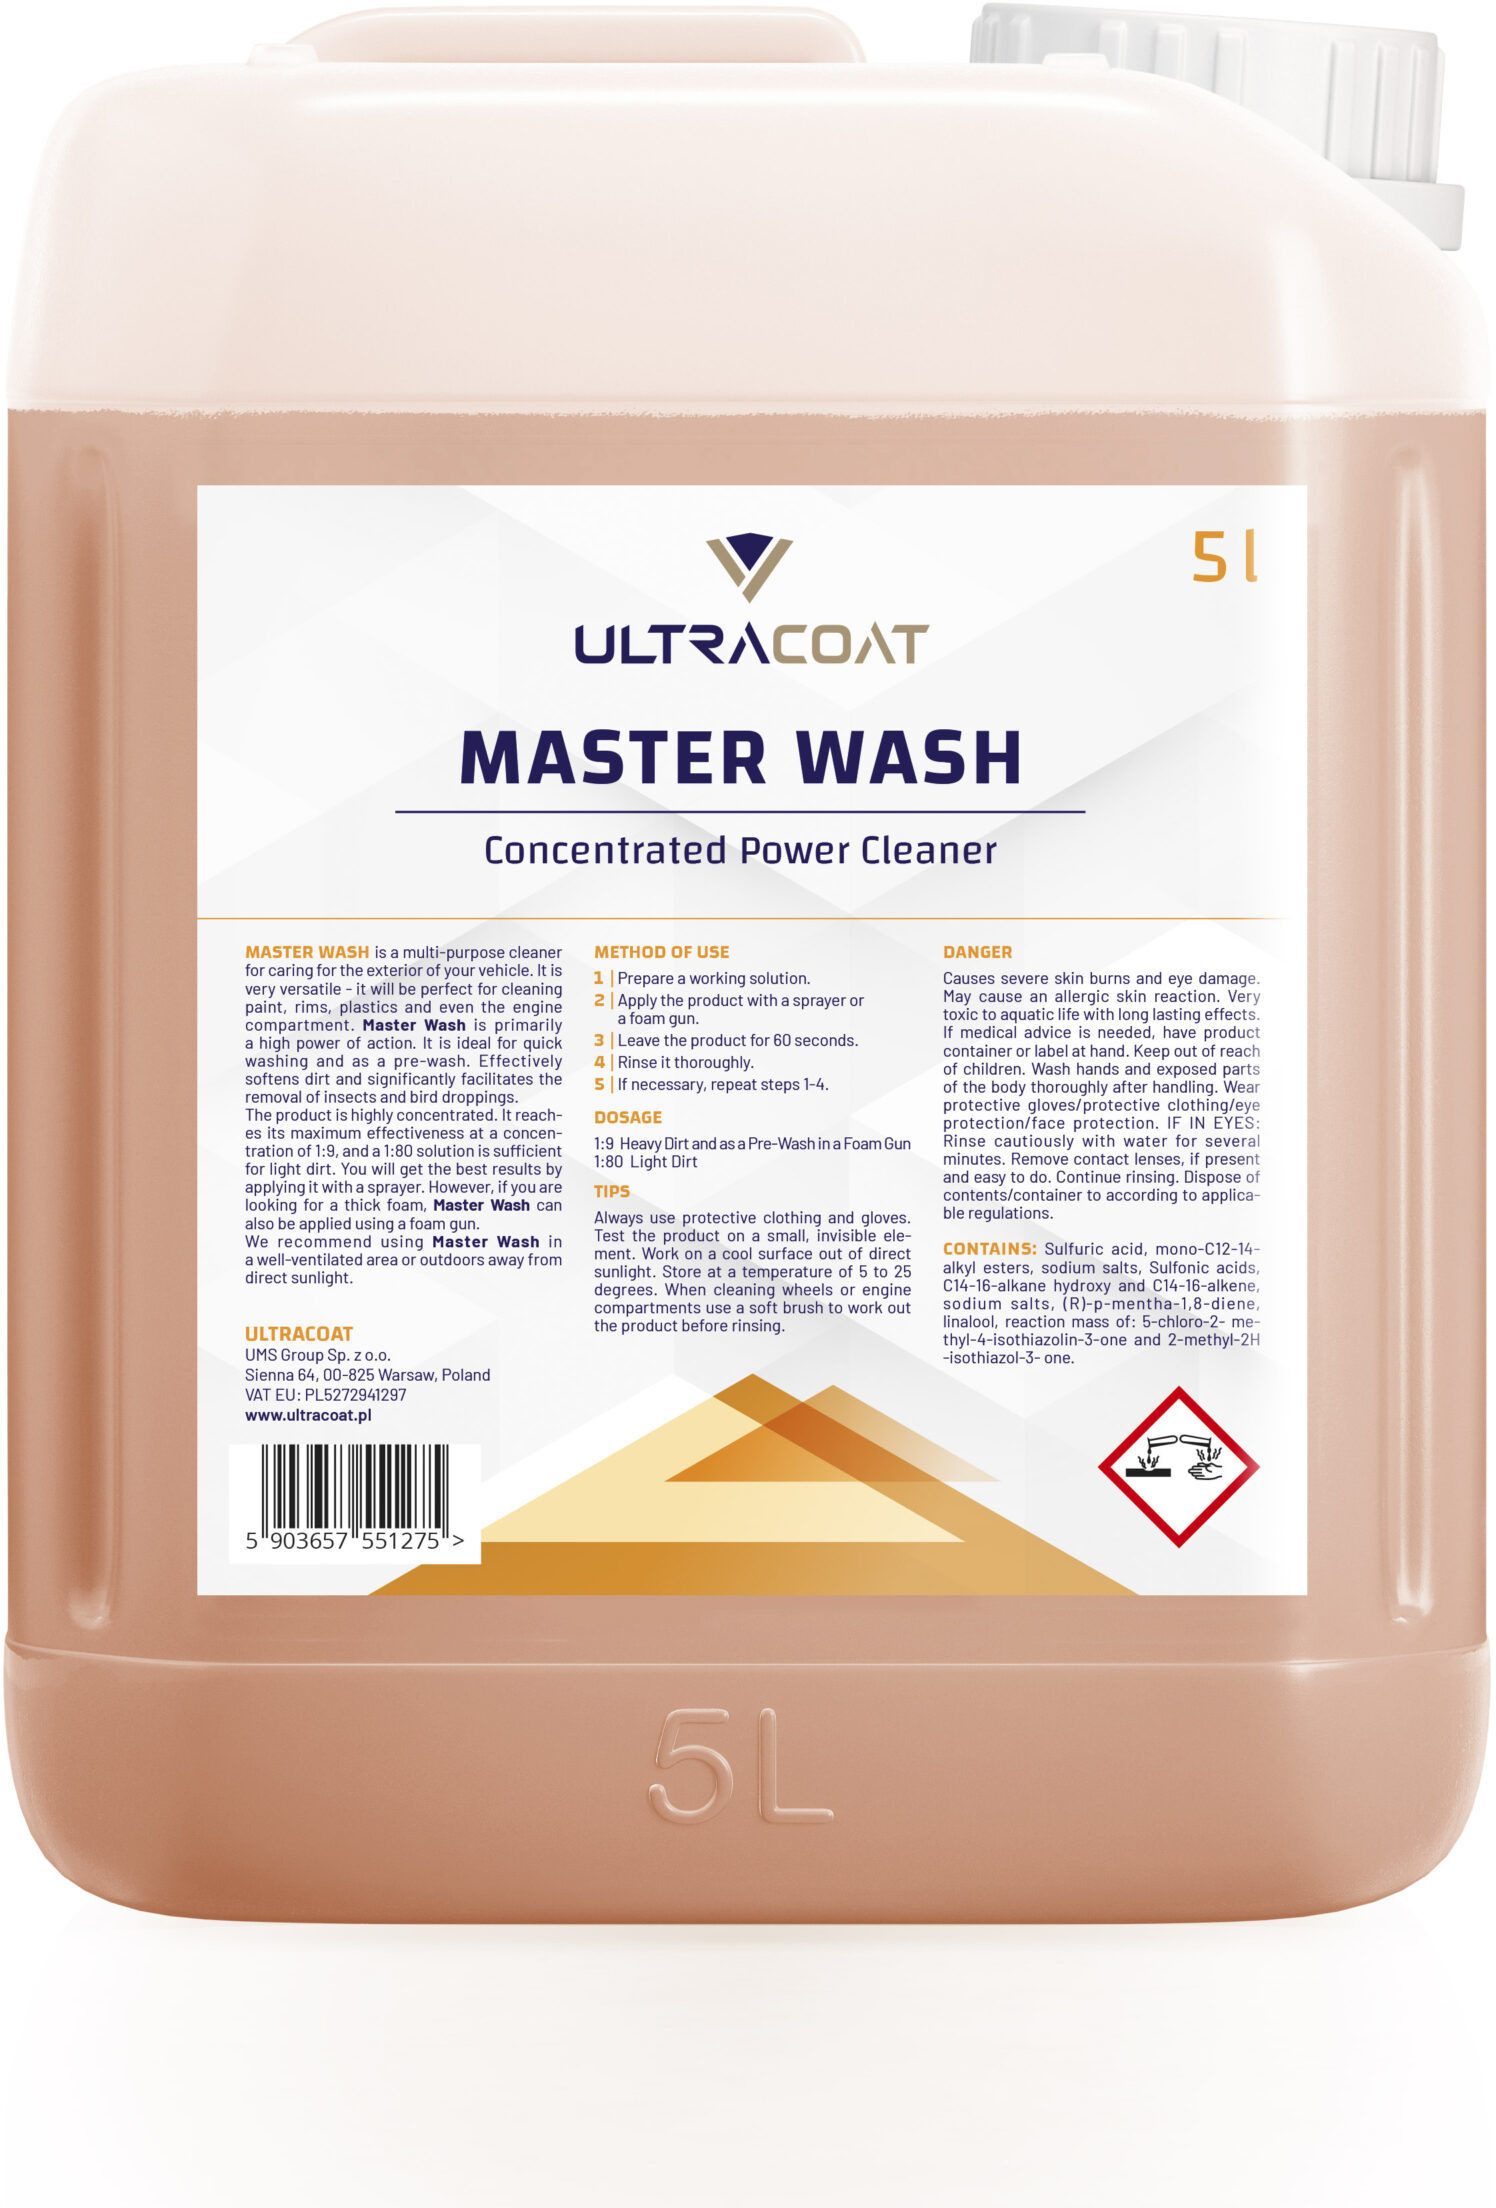 Ultracoat Ultracoat Master Wash  preparat do mycia wstępnego, silnie skoncentrowany 5L ULT000033